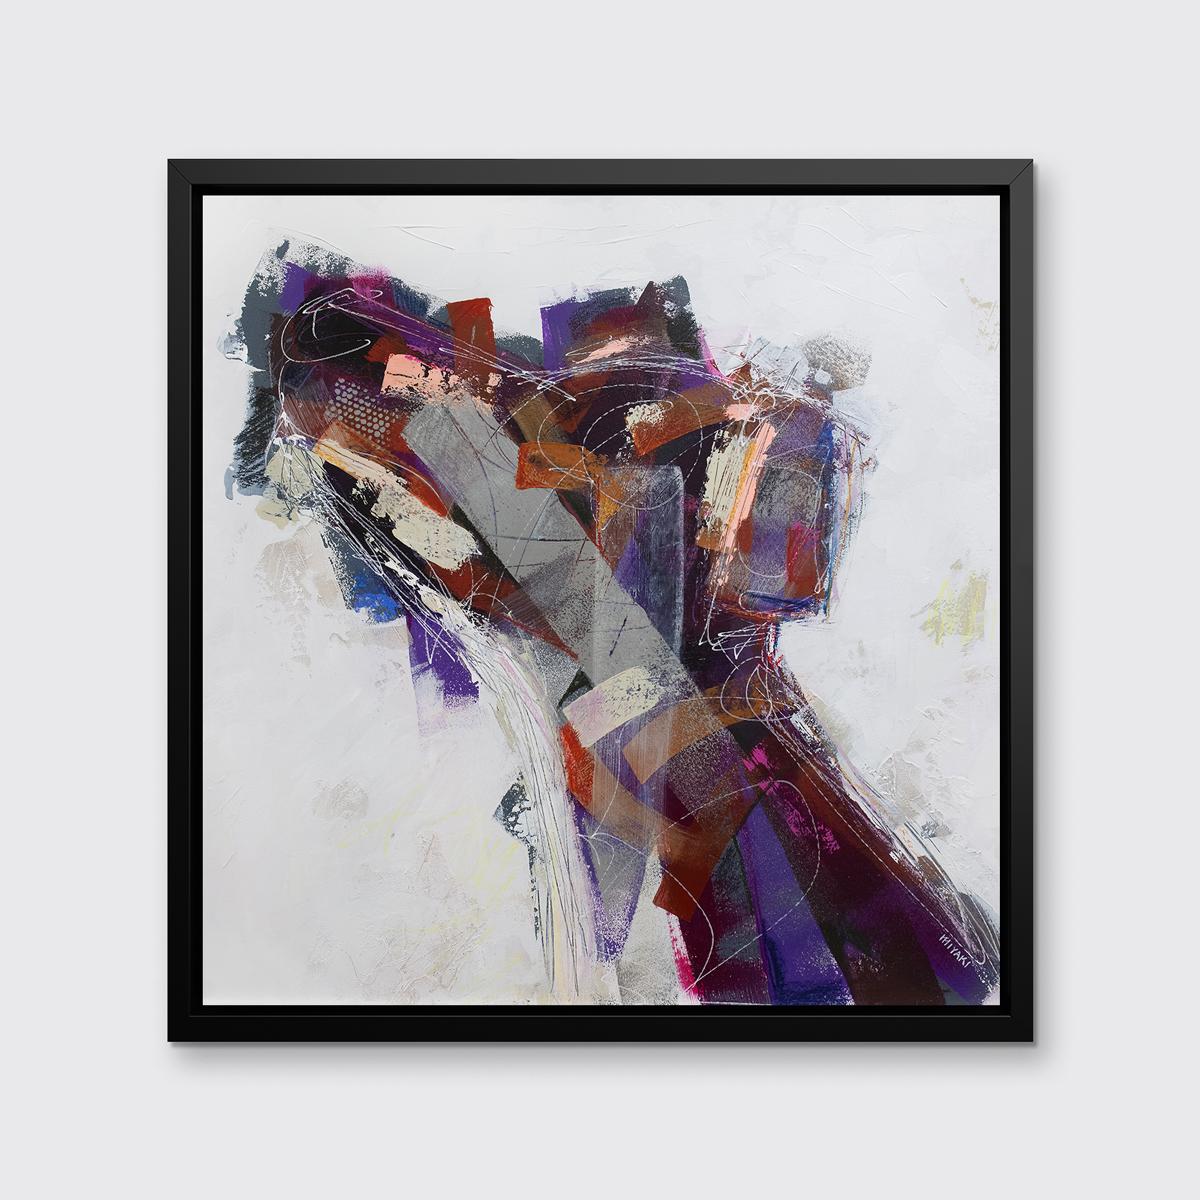 « Colorful Basenji » Impression giclée en édition limitée, 36